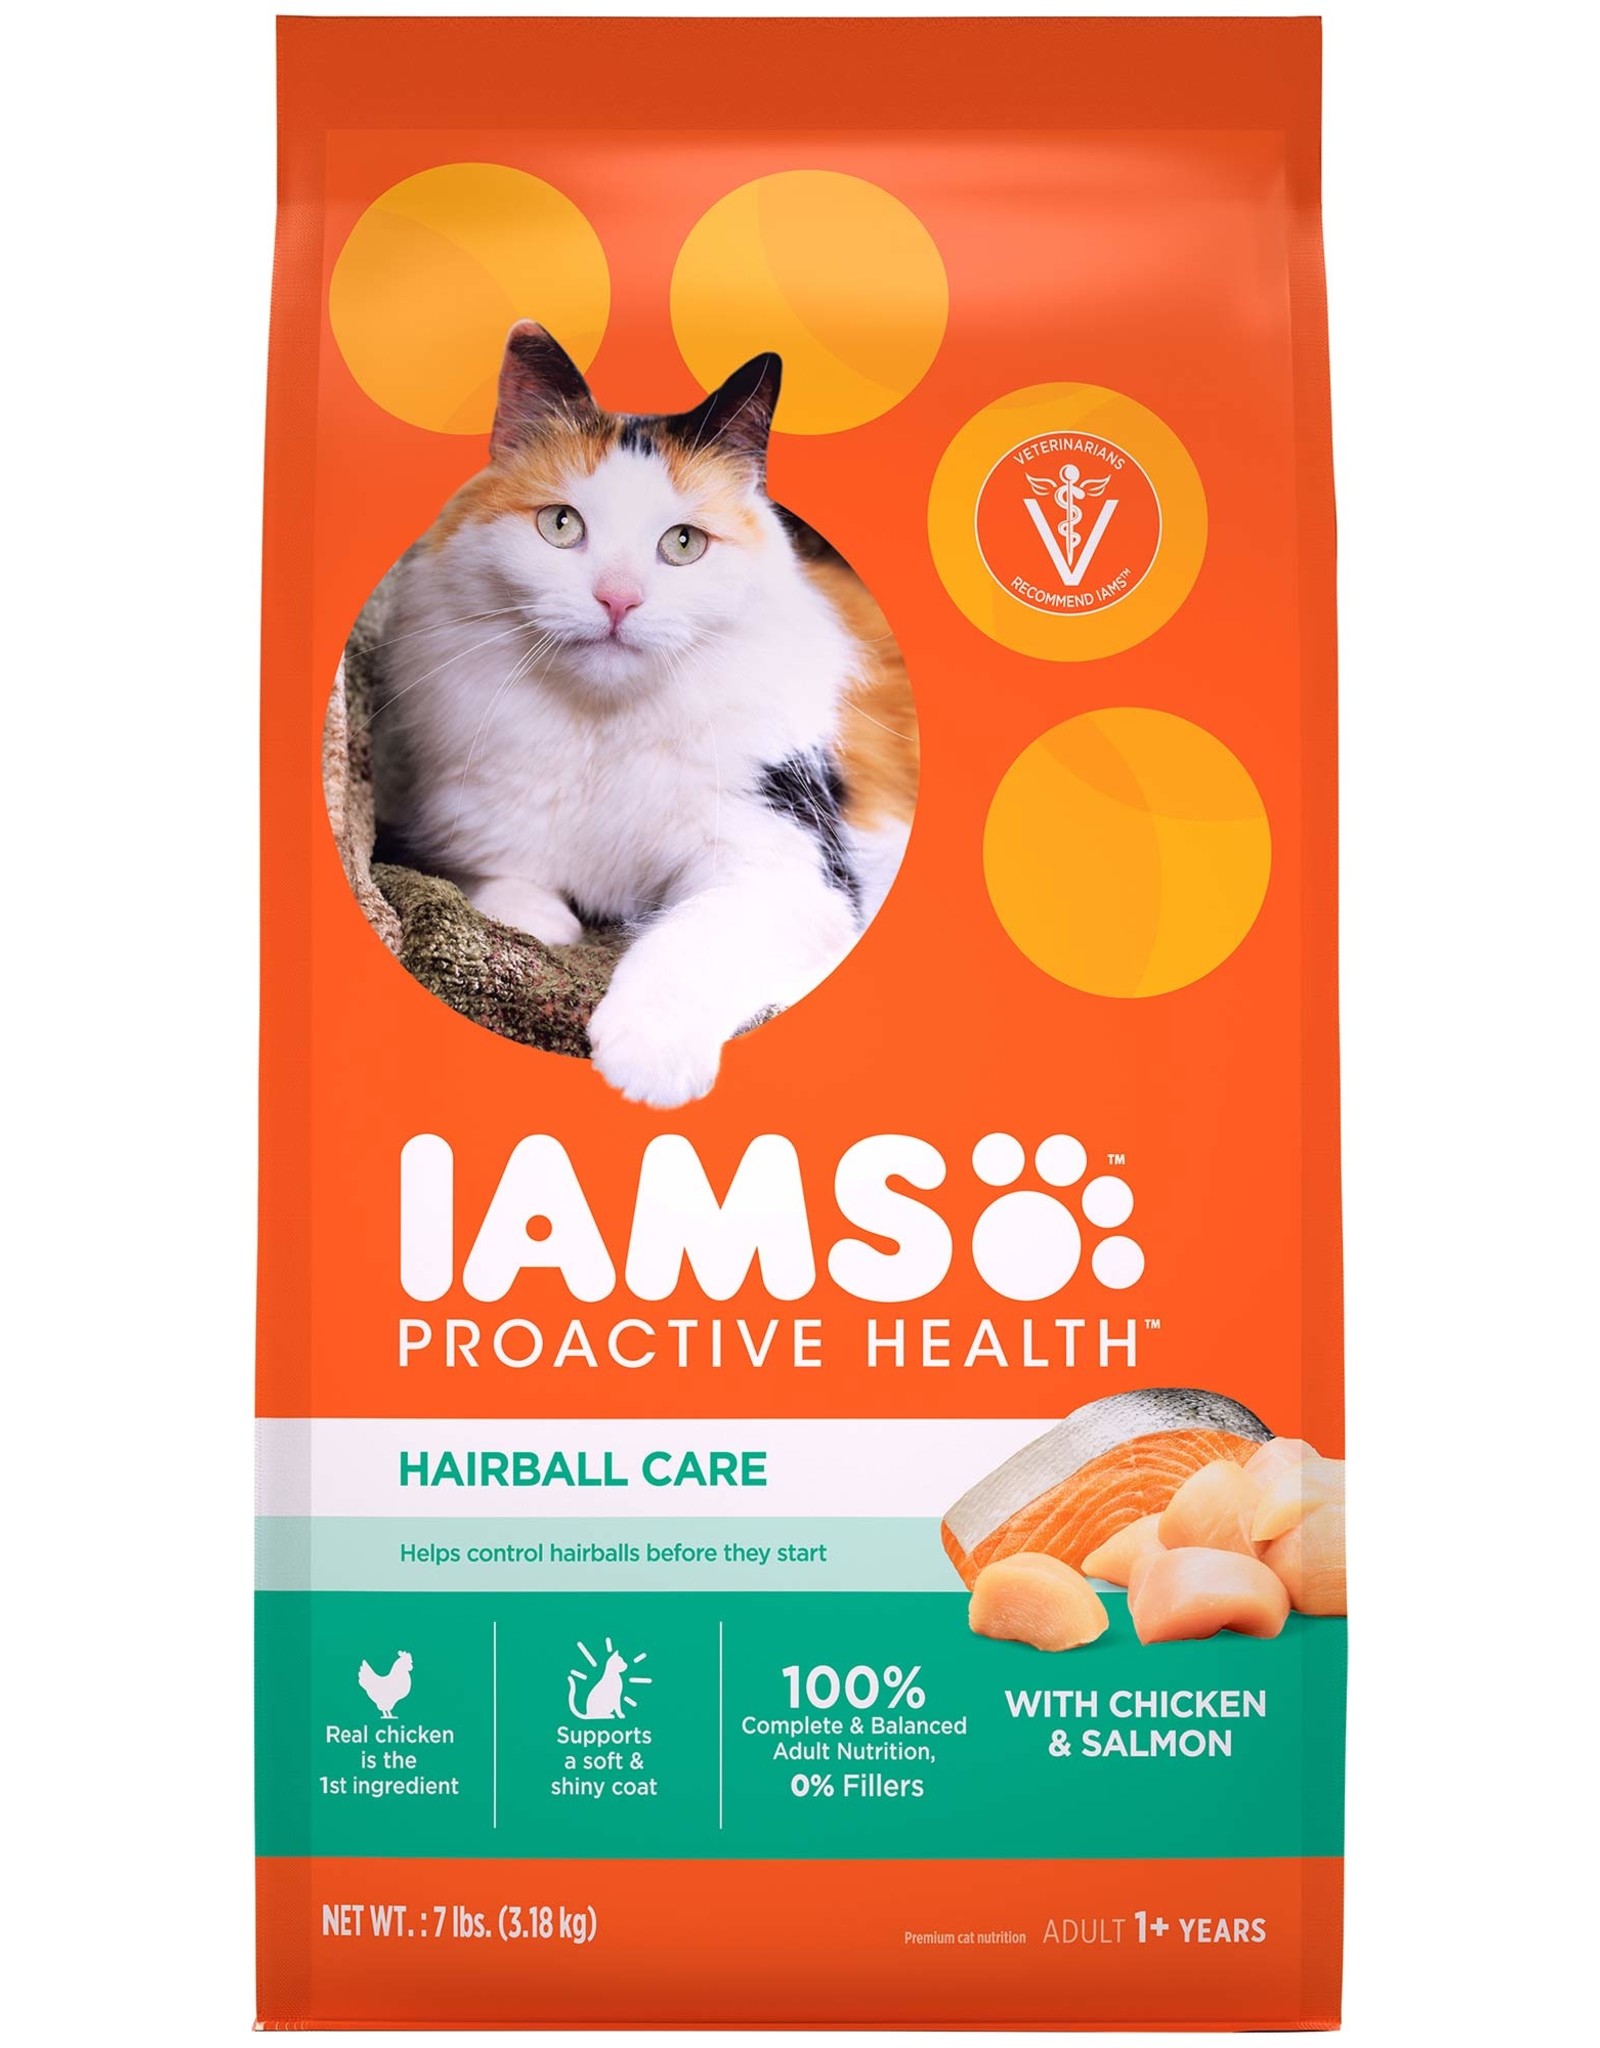 IAMS COMPANY IAMS CAT HAIRBALL 3.5LBS